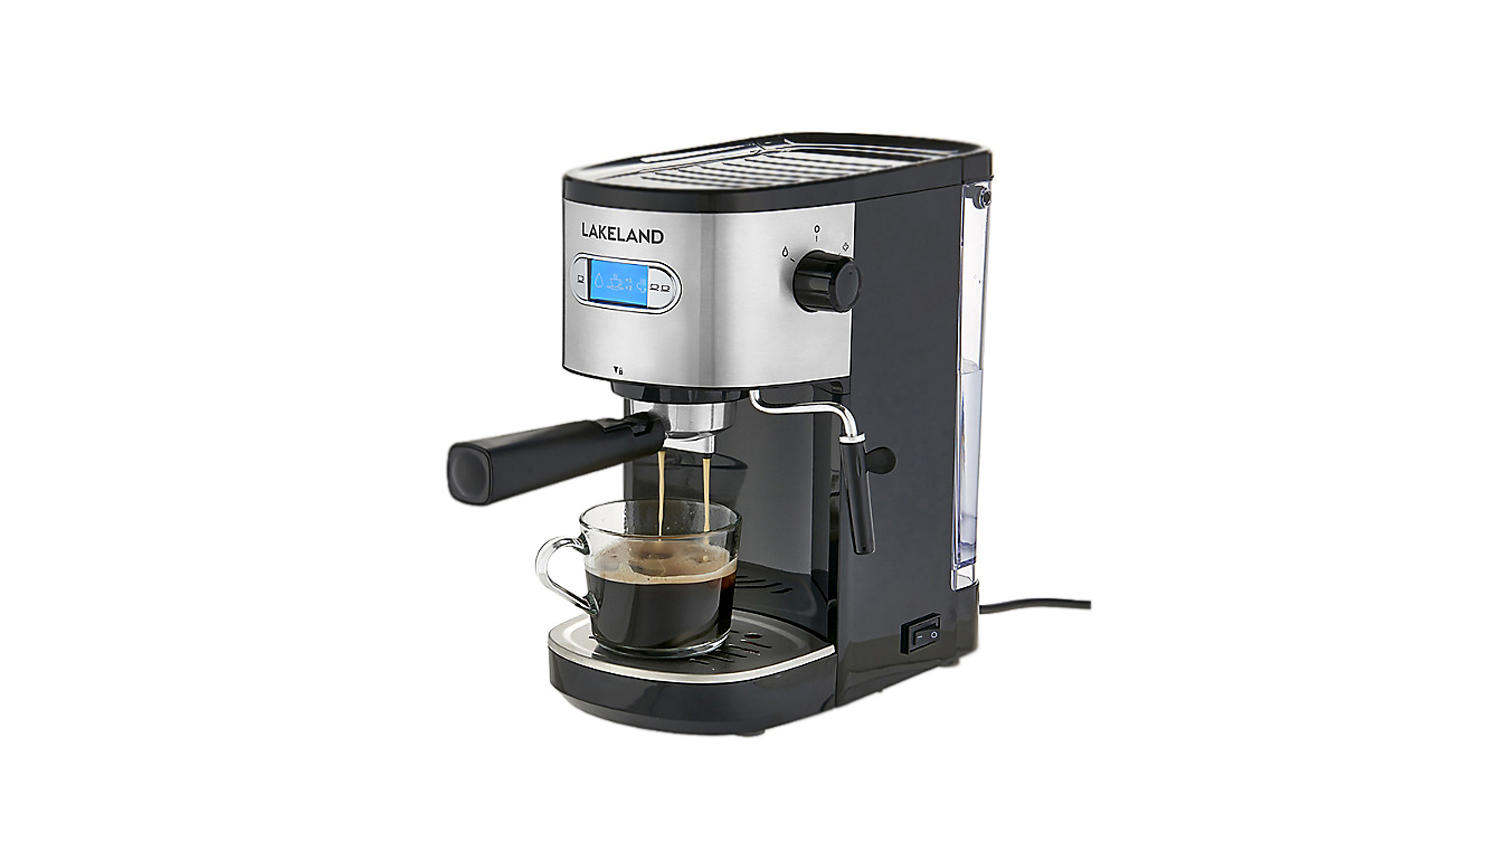 Lakeland 3-in-1 Espresso Machine 63481 User Manual